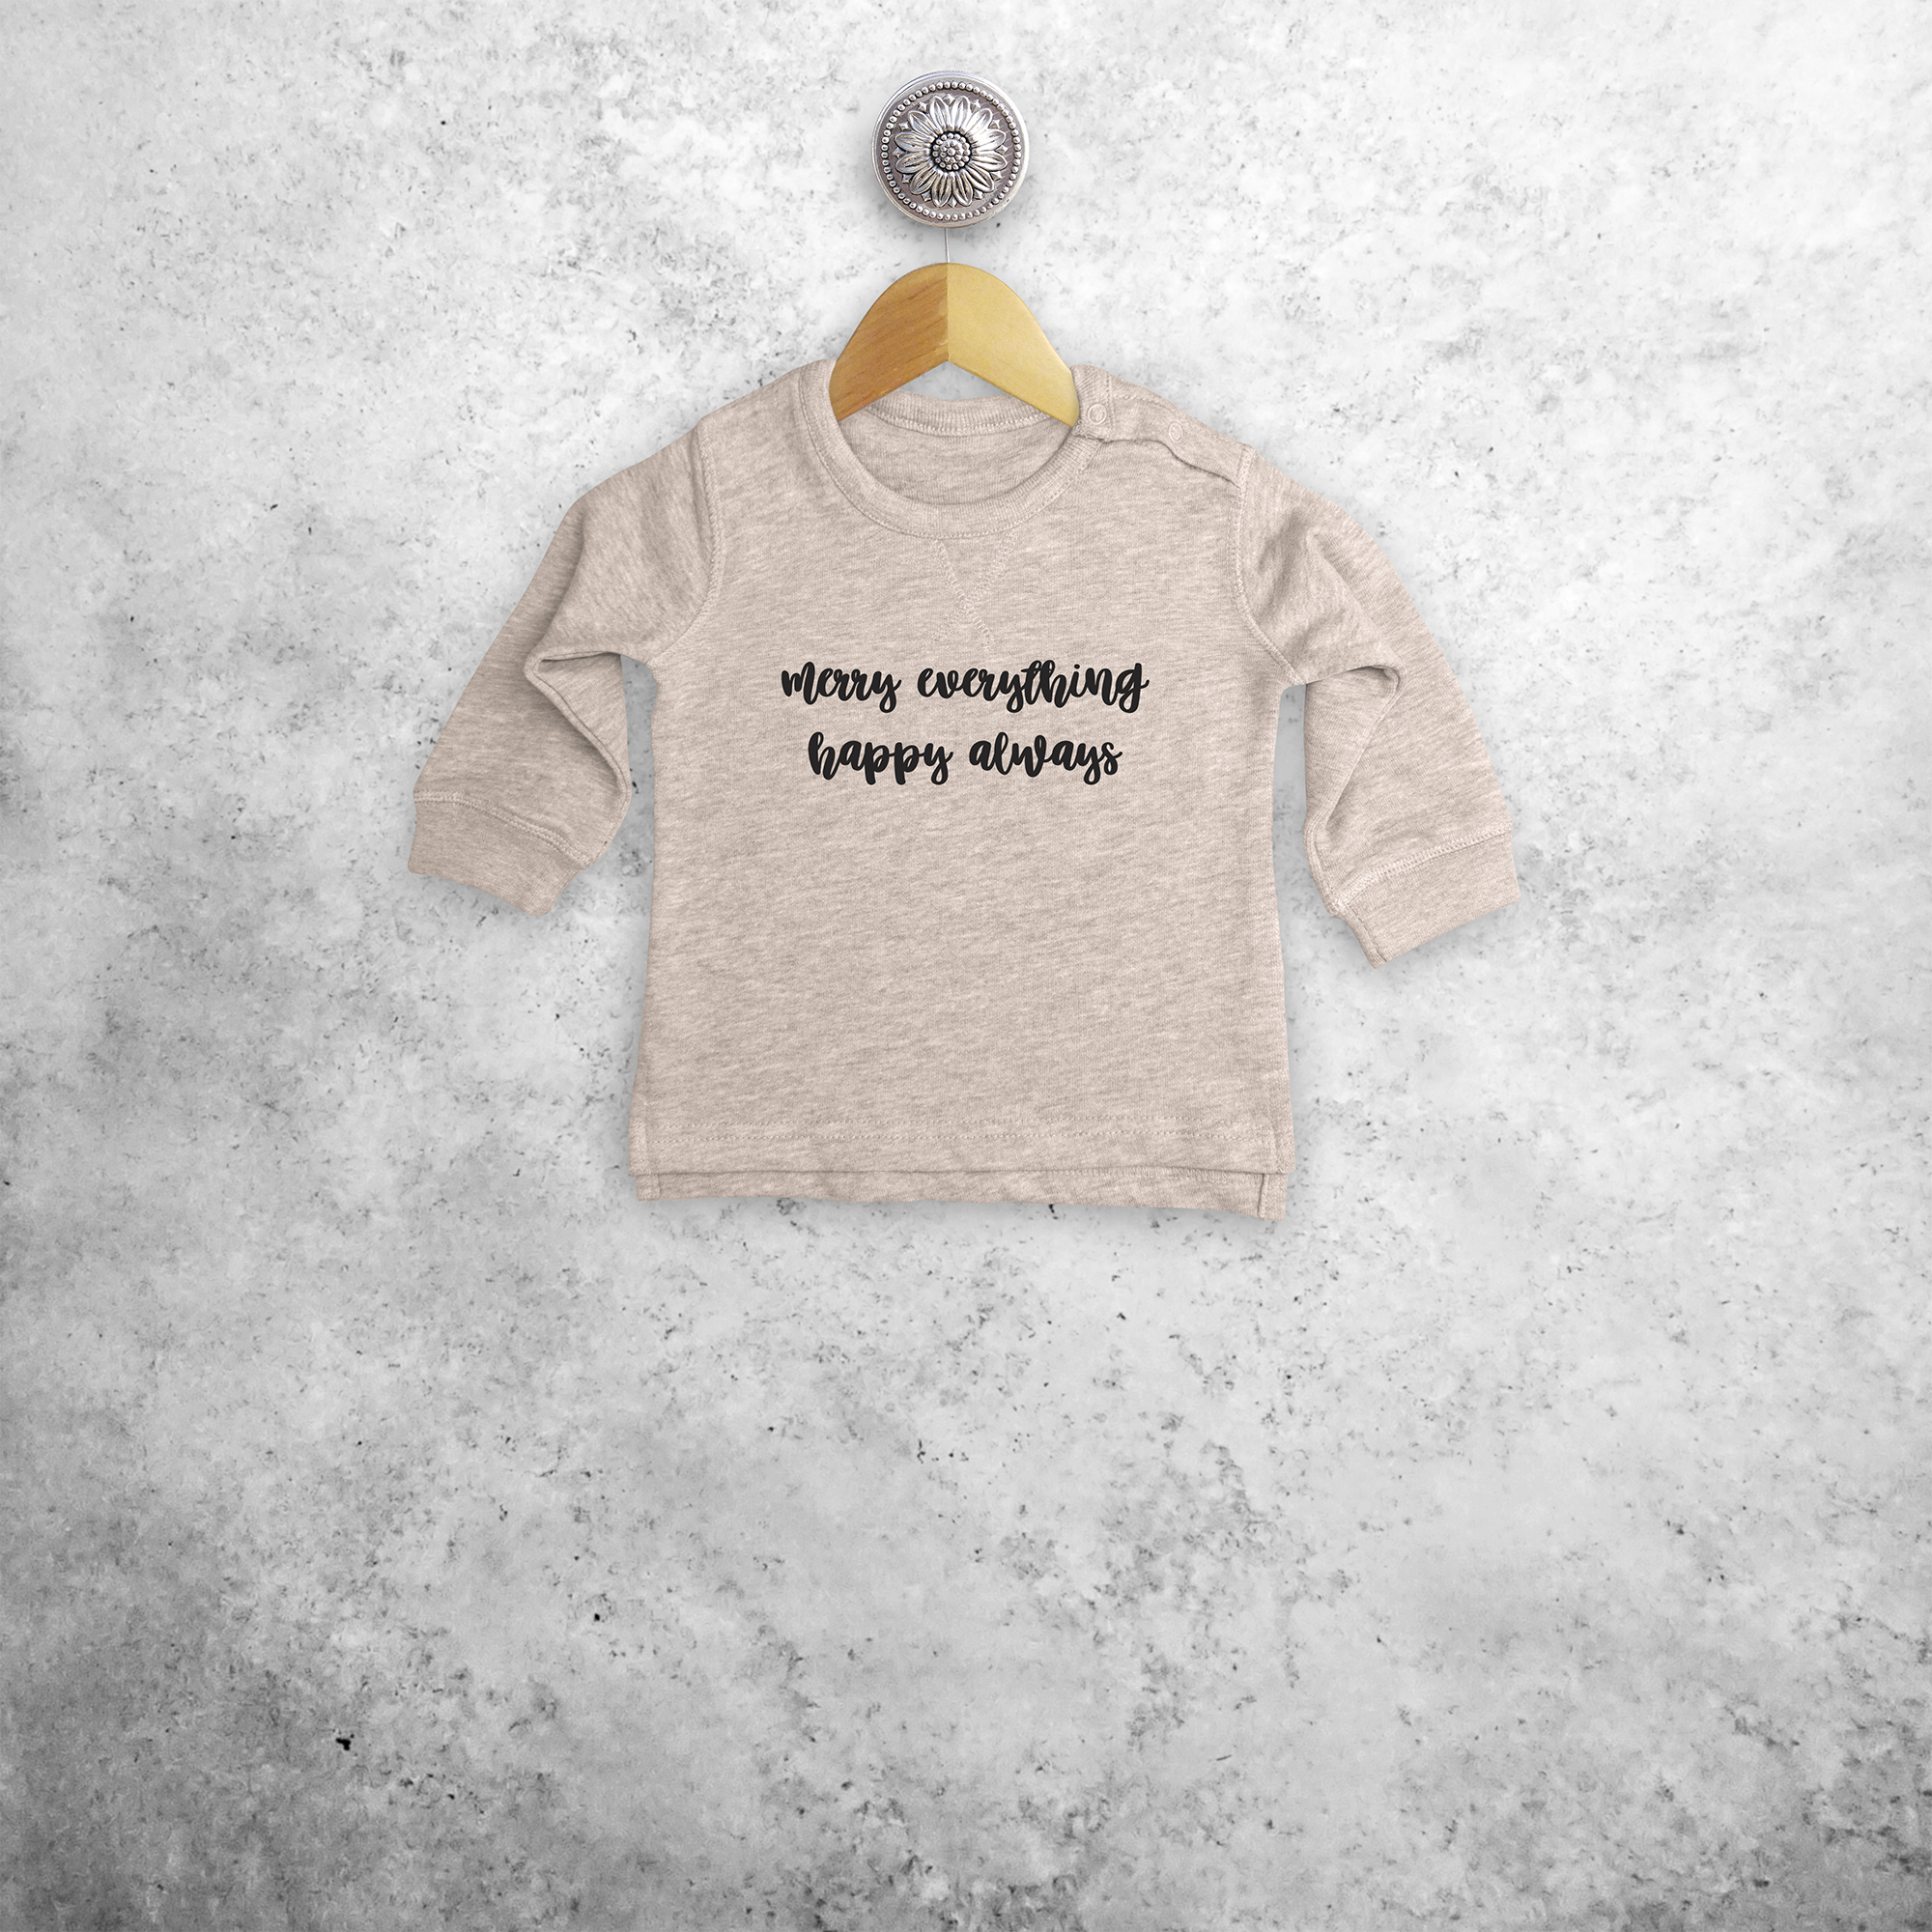 'Merry everything, Happy always' baby sweater